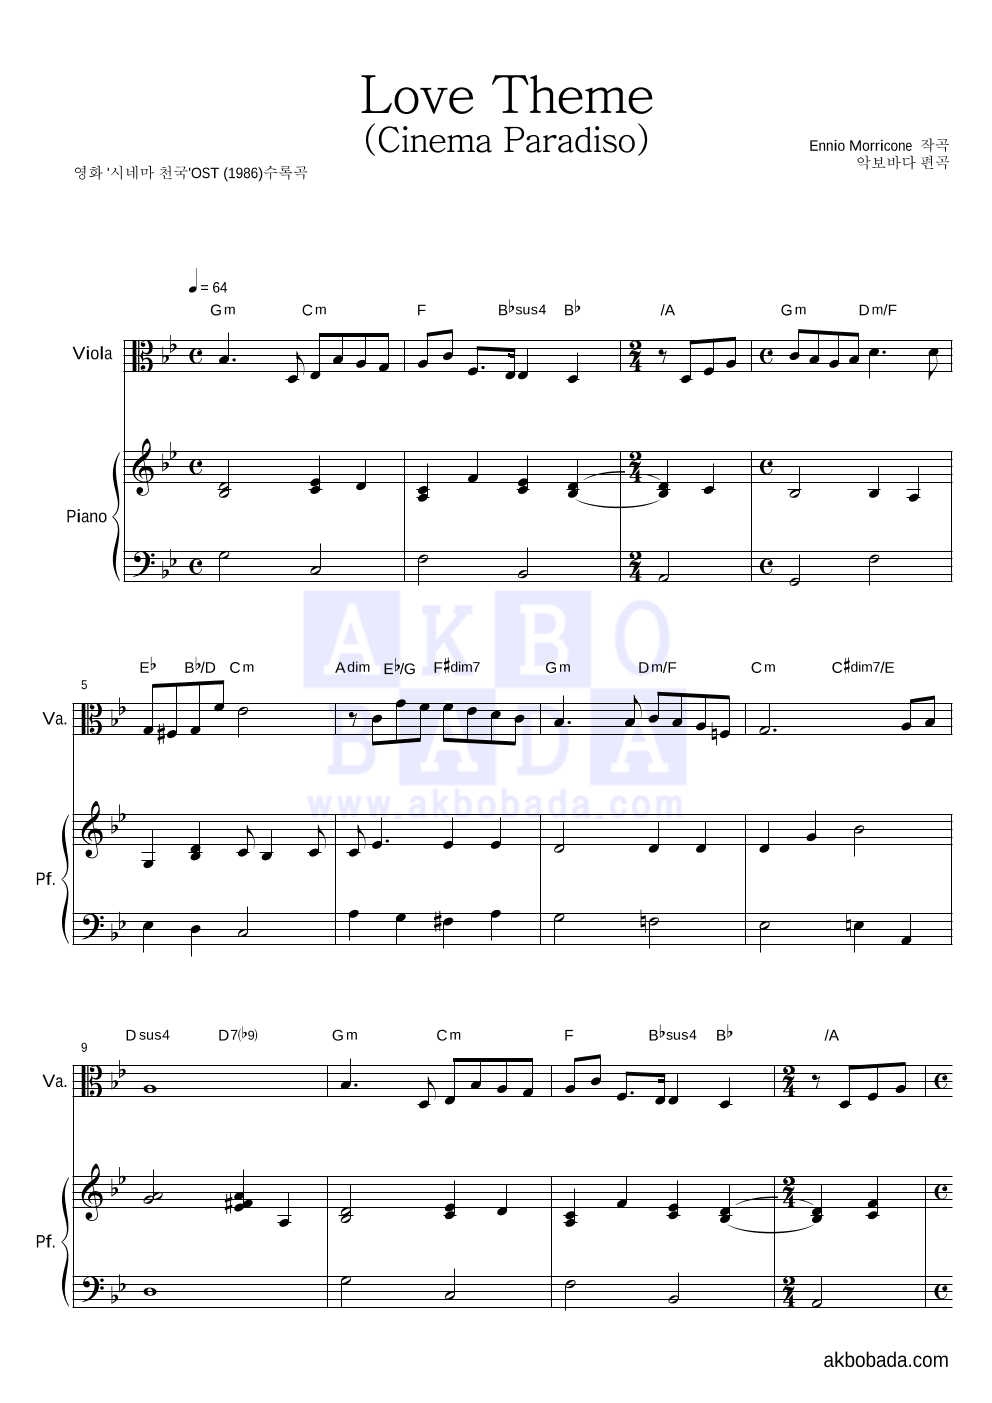 Ennio Morricone - Love Theme (Cinema Paradiso) 비올라&피아노 악보 